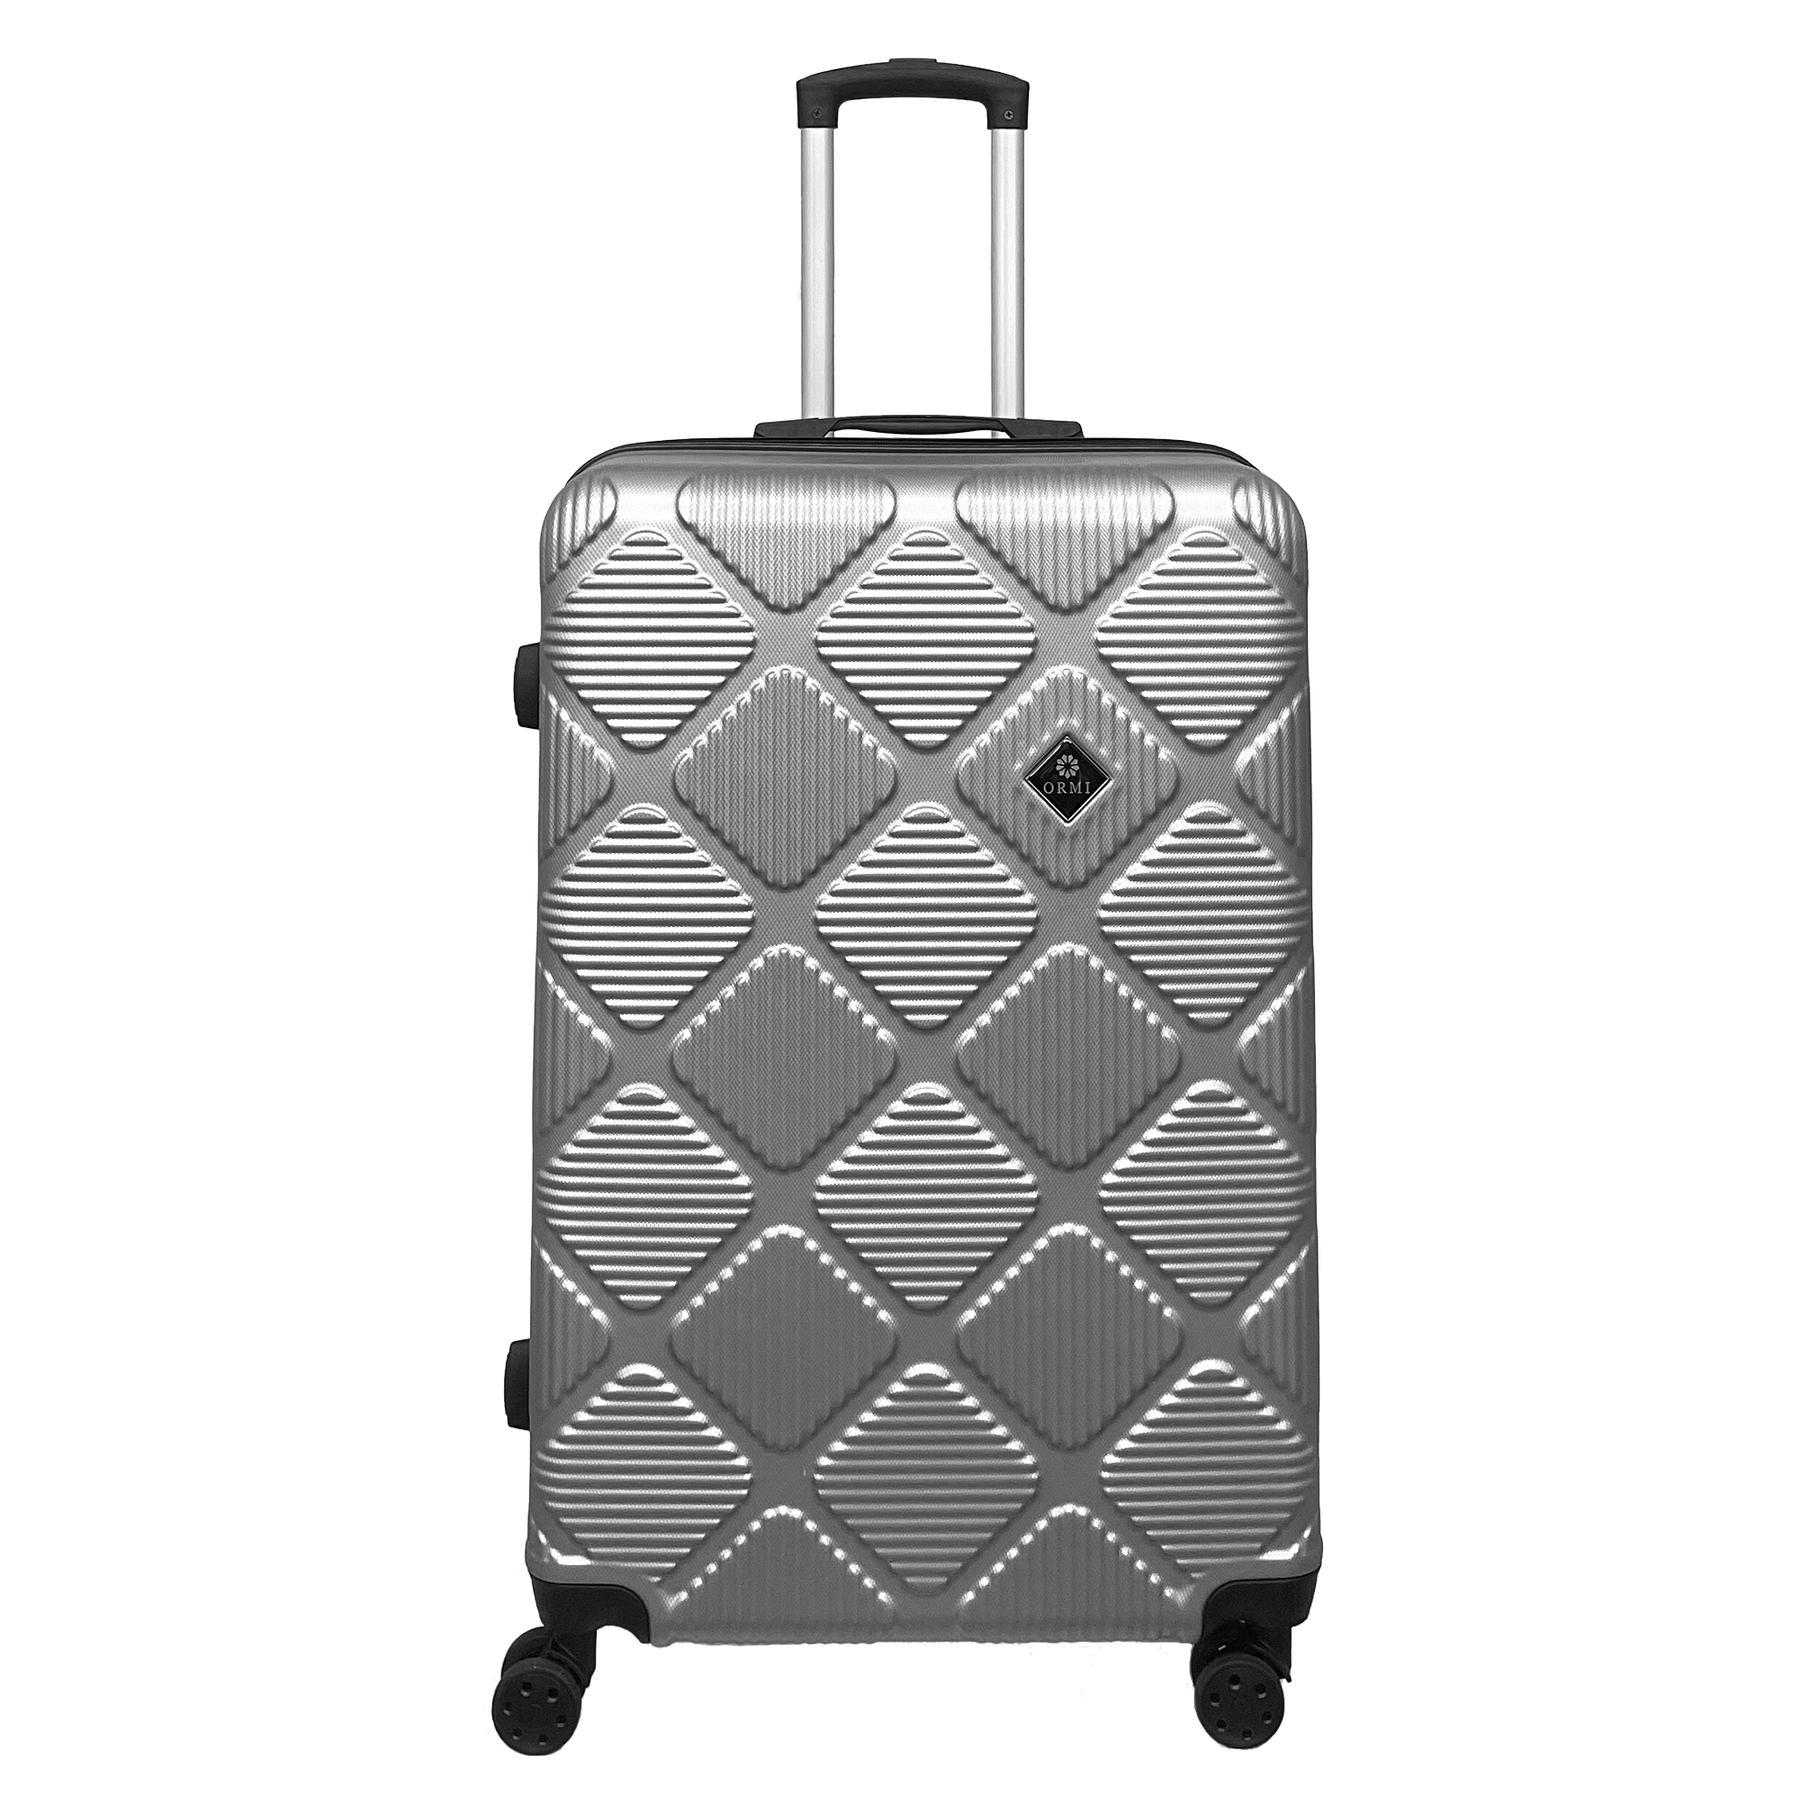 Ormi Diamond Lux: Μεγάλη βαλίτσα 75x50x30 εκατοστά, Σκληρή βαλίτσα και υπερελαφριά, 8 δυναμικοί τροχοί 360°